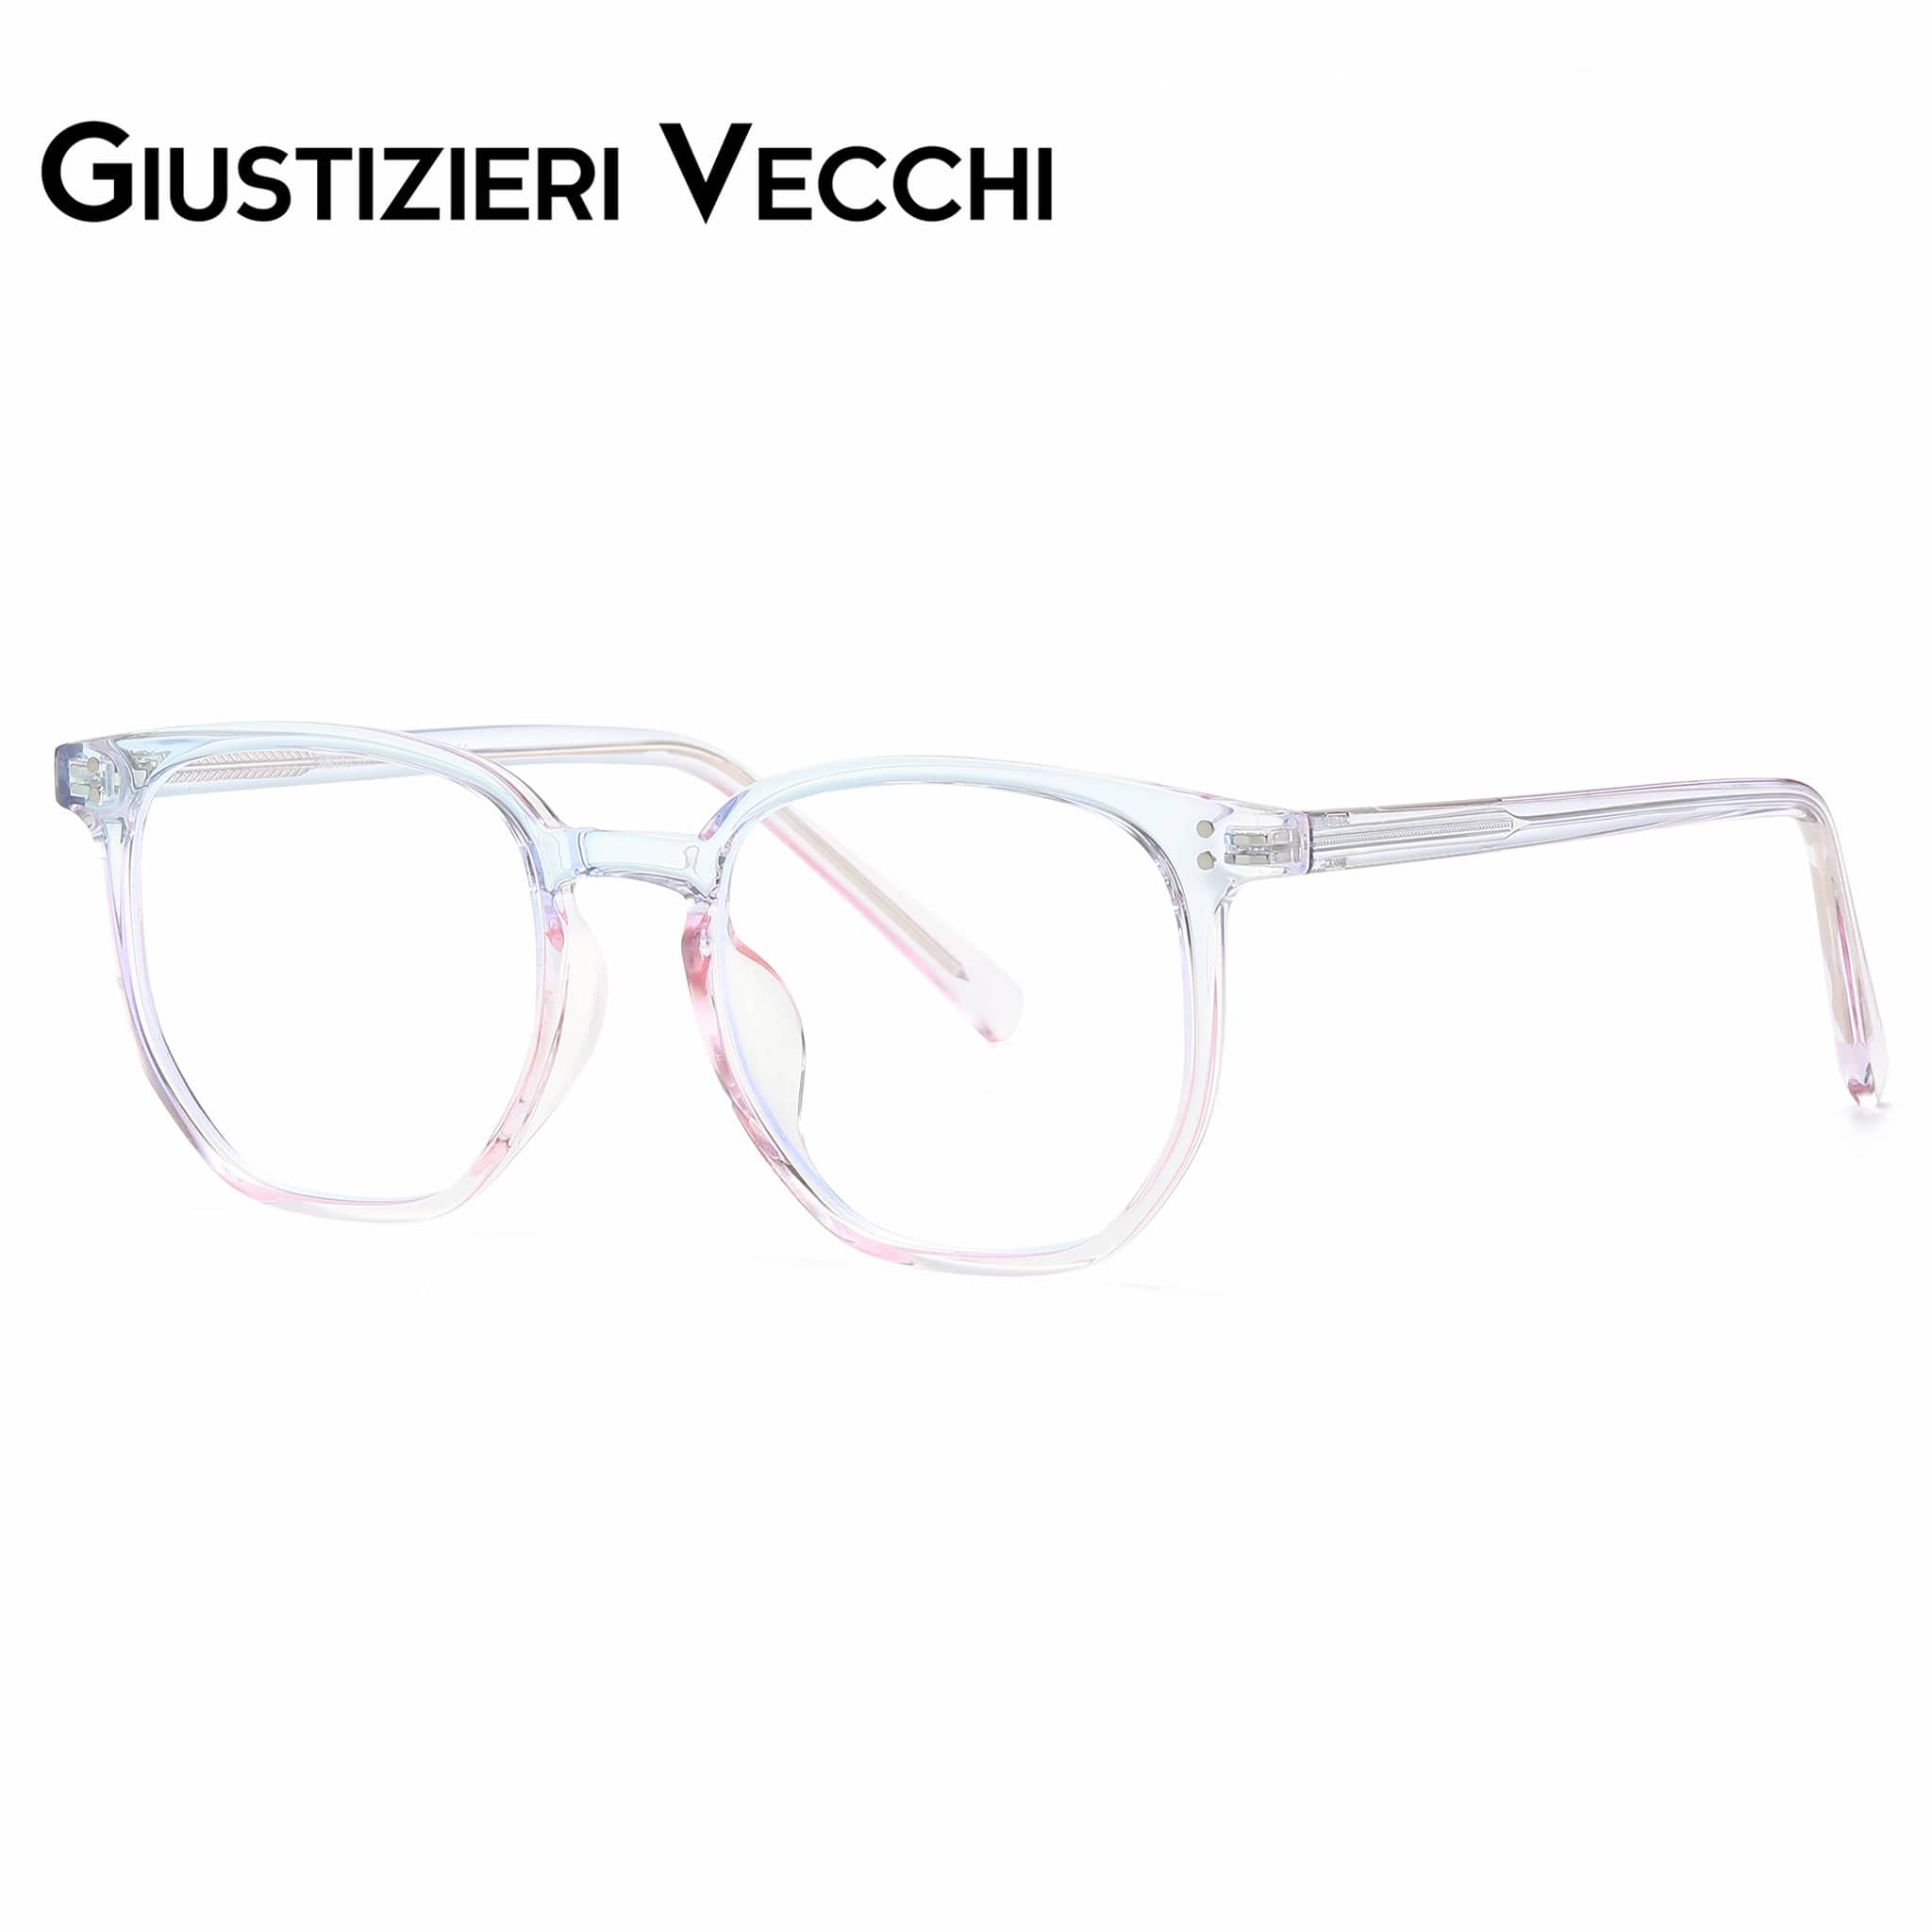 GIUSTIZIERI VECCHI Eyeglasses Venezia Vista Duo